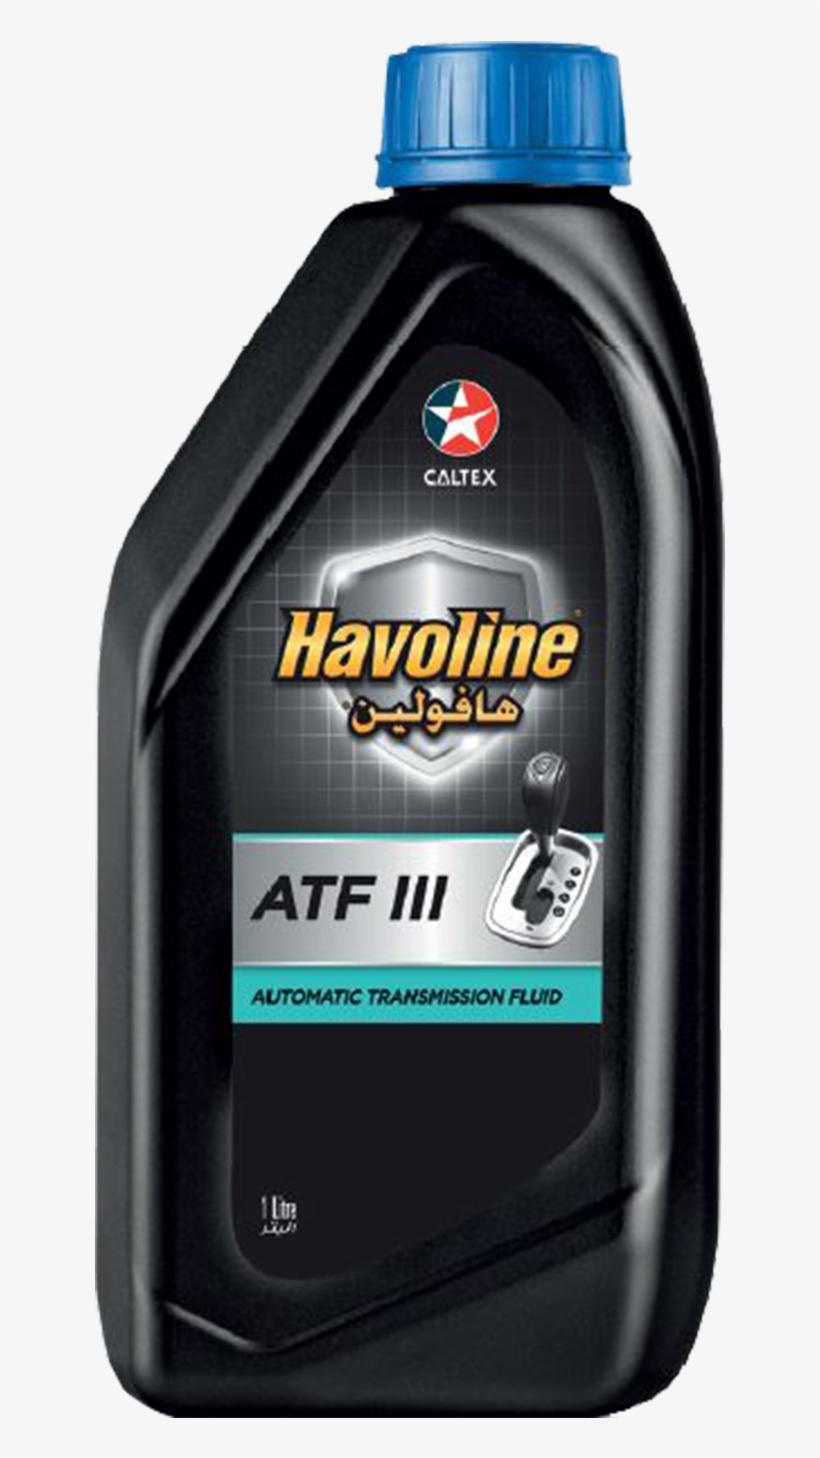 Havoline Atf Iii - Havoline 20w50 Motorcycle Oil, transparent png #3742320